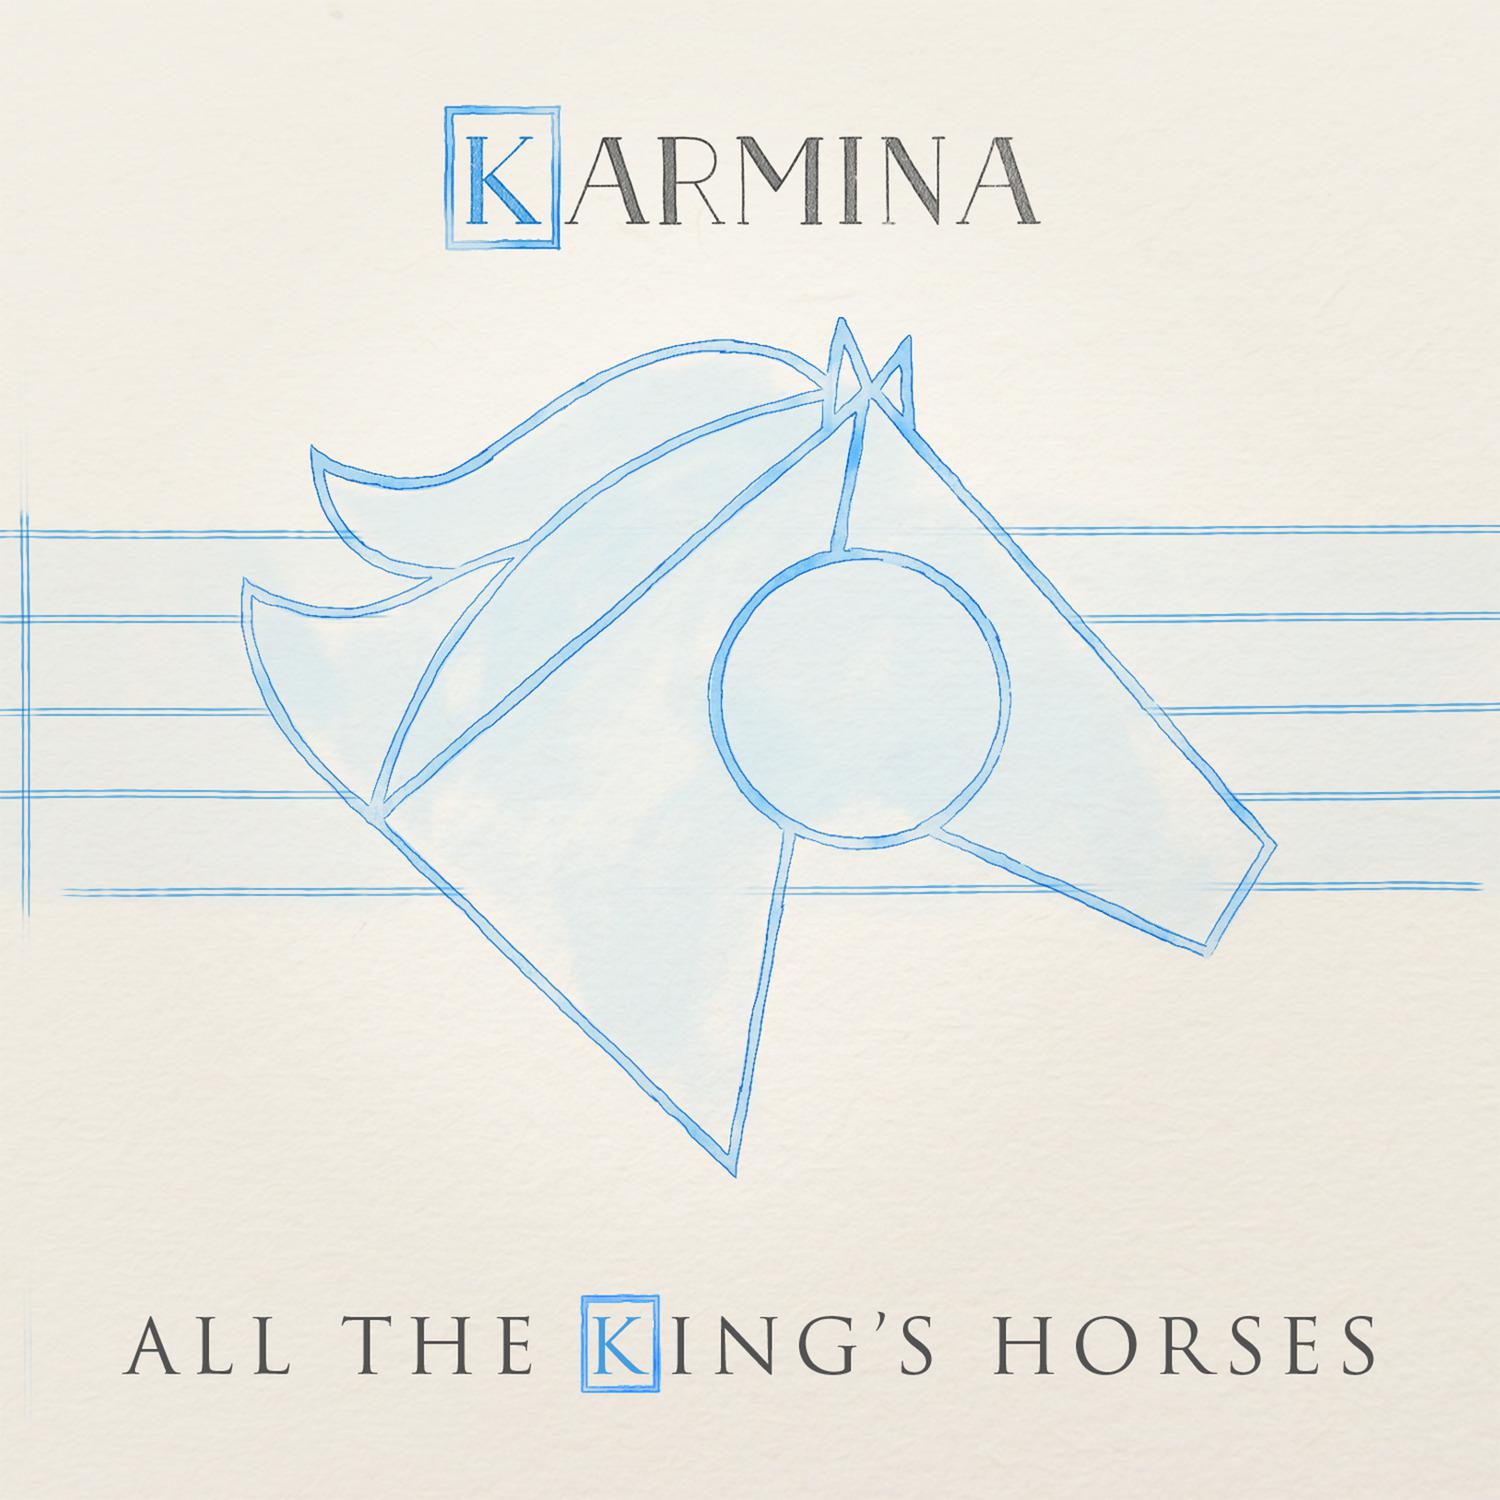 All the King's Horses歌词 歌手Karmina-专辑All the King's Horses-单曲《All the King's Horses》LRC歌词下载